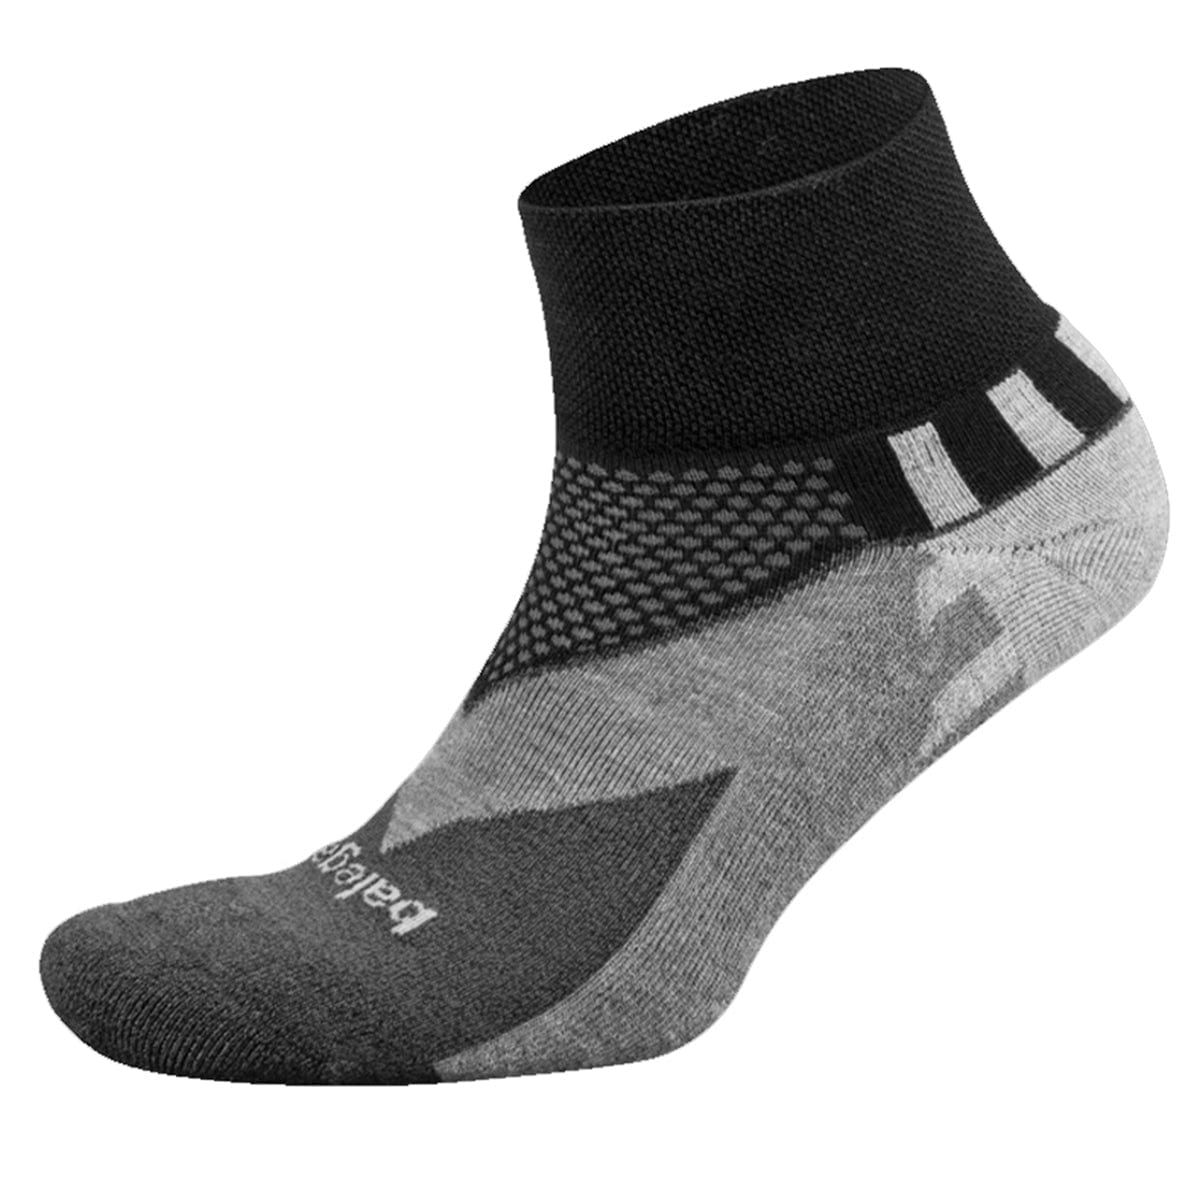 Balega Socks Black / Charcoal / Small Enduro Quarter Running Socks XMiles